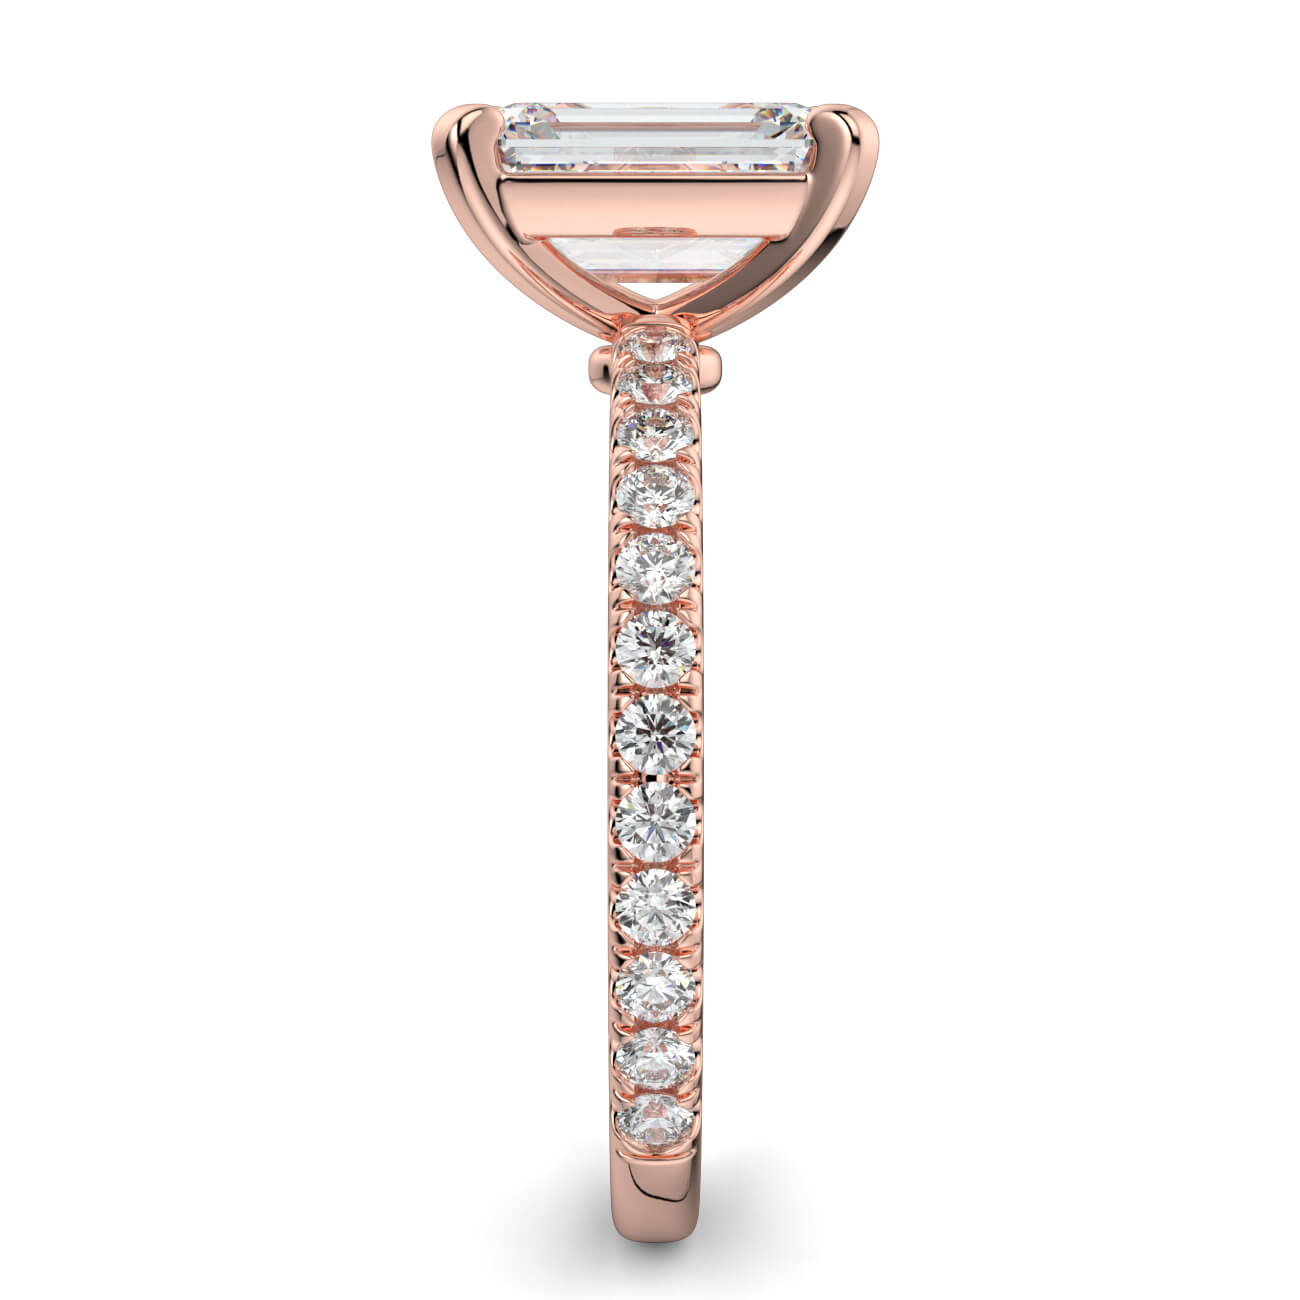 Delicate ‘Liat’ Emerald Cut Diamond Engagement Ring in 18k Rose Gold – Australian Diamond Network